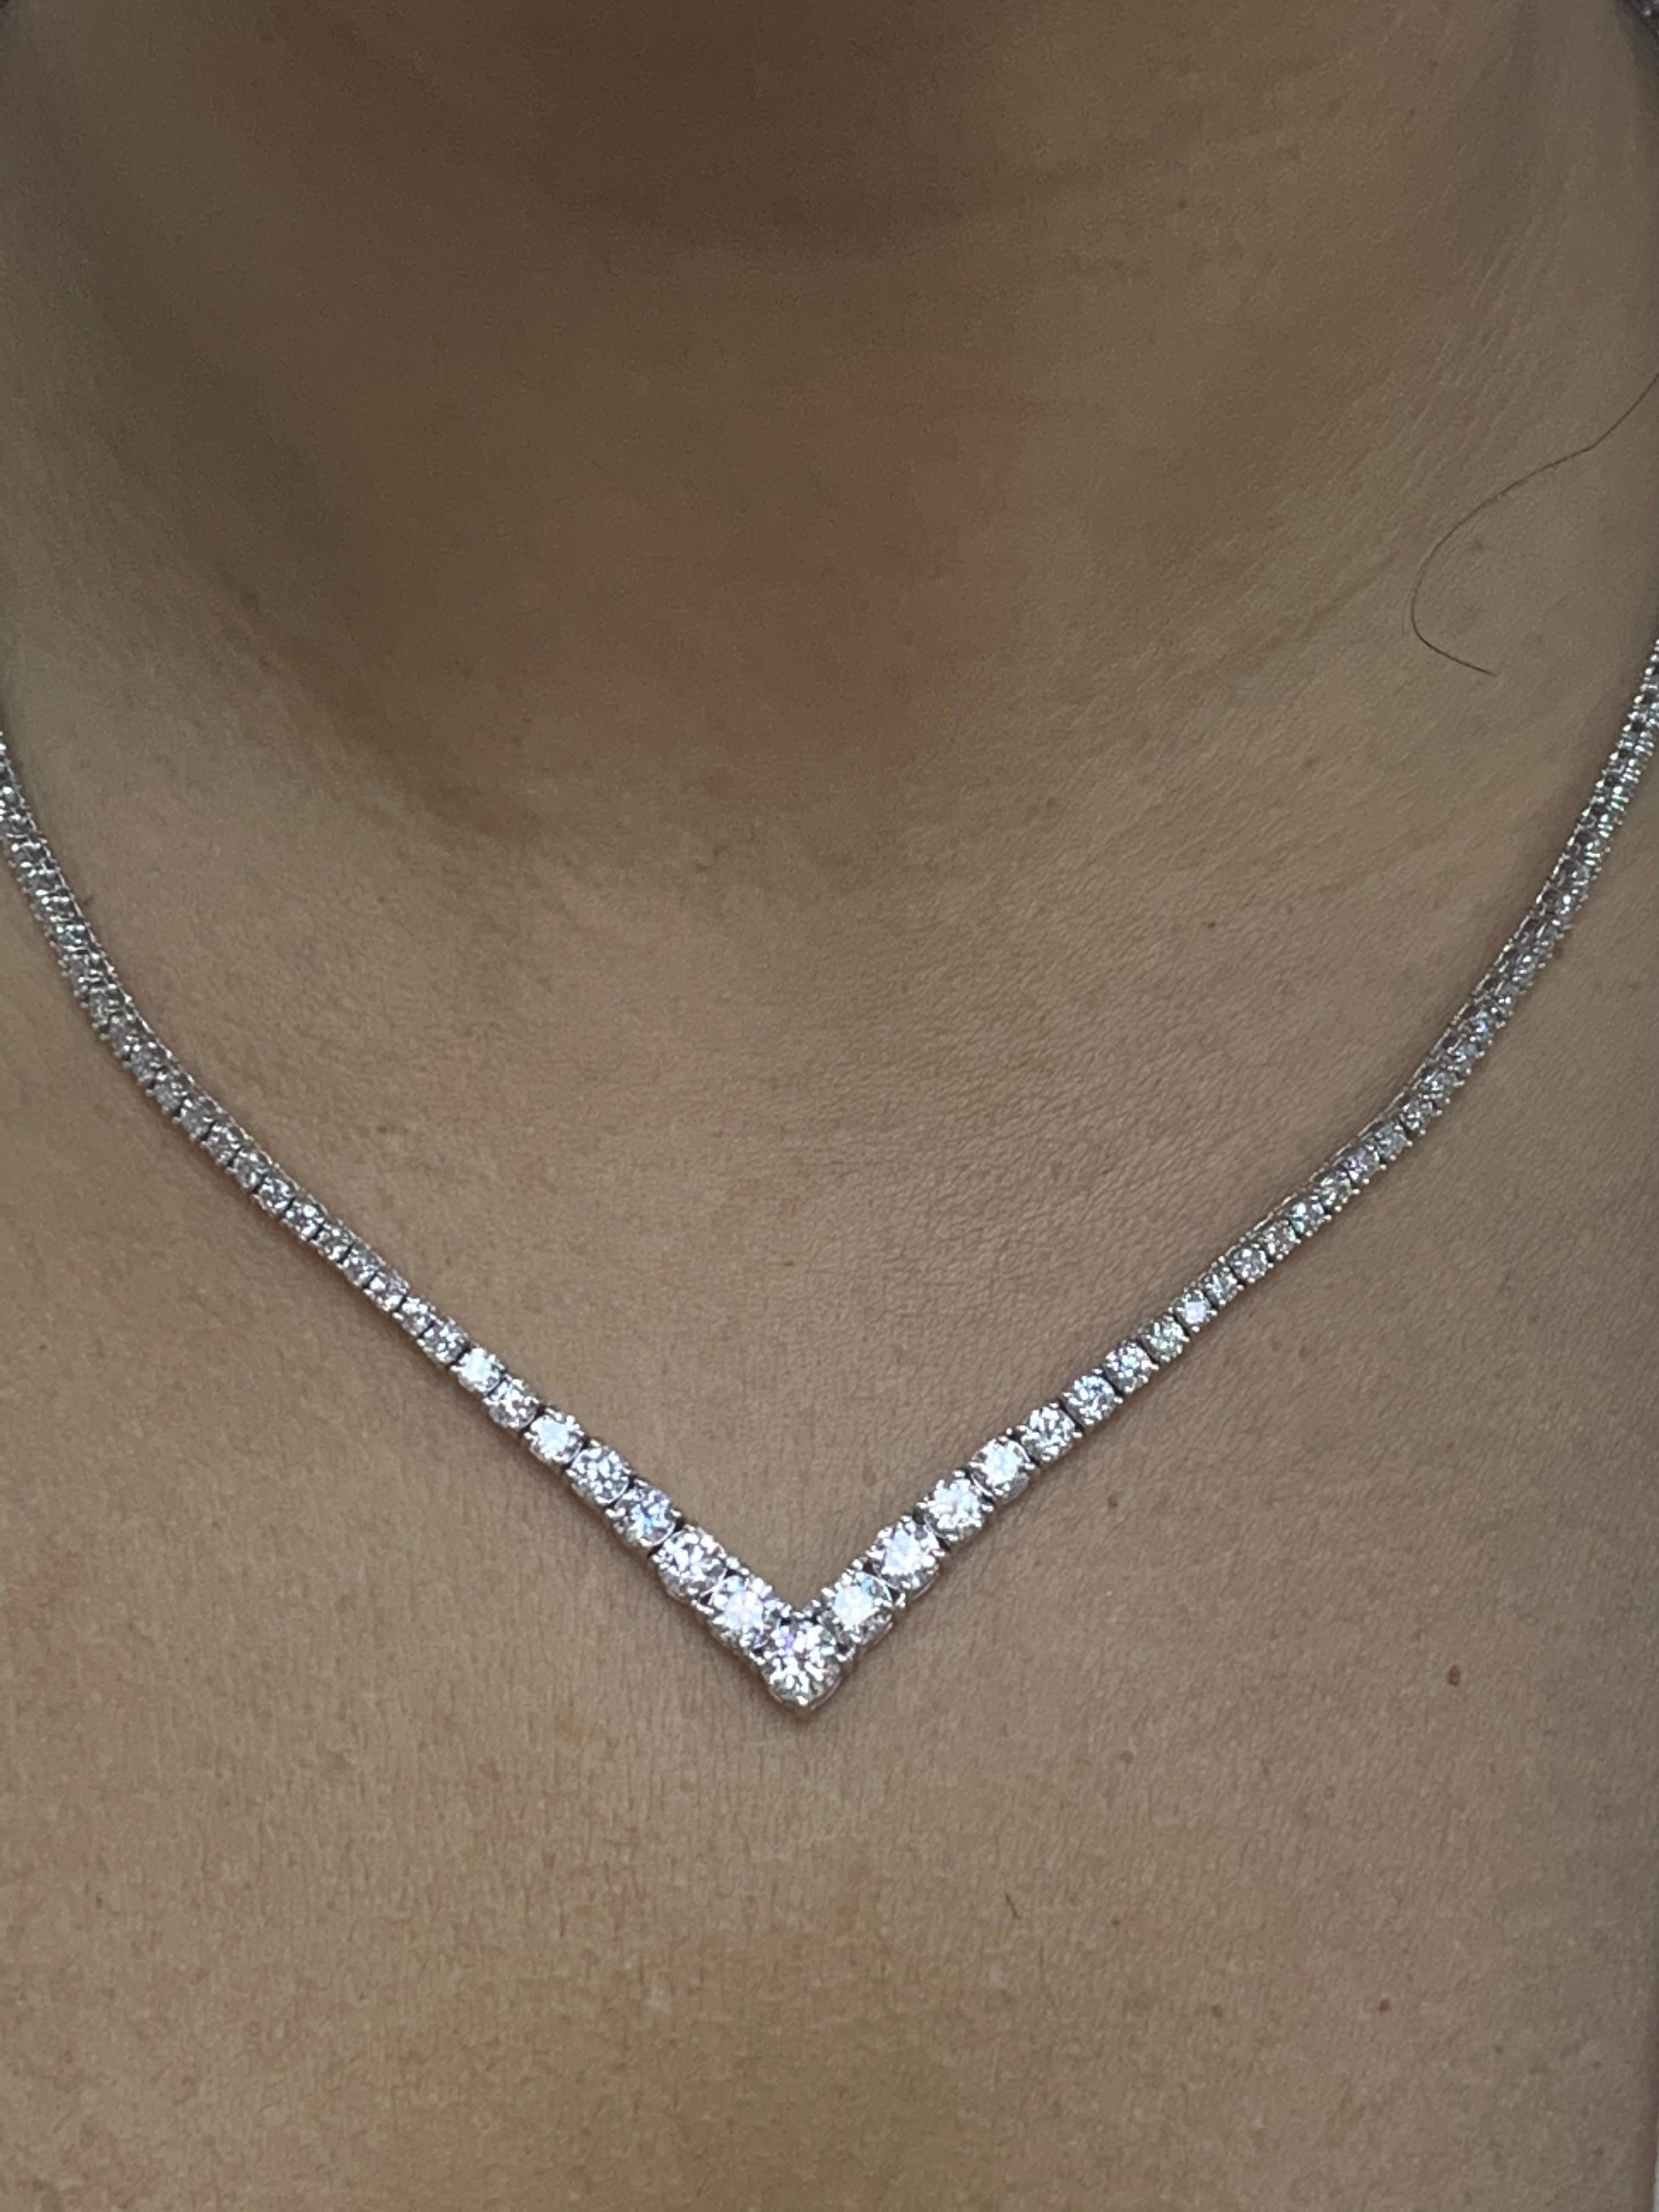 Women's 5.05 Carat Round Brilliant Diamond Graduating Necklace in 14K White Gold For Sale